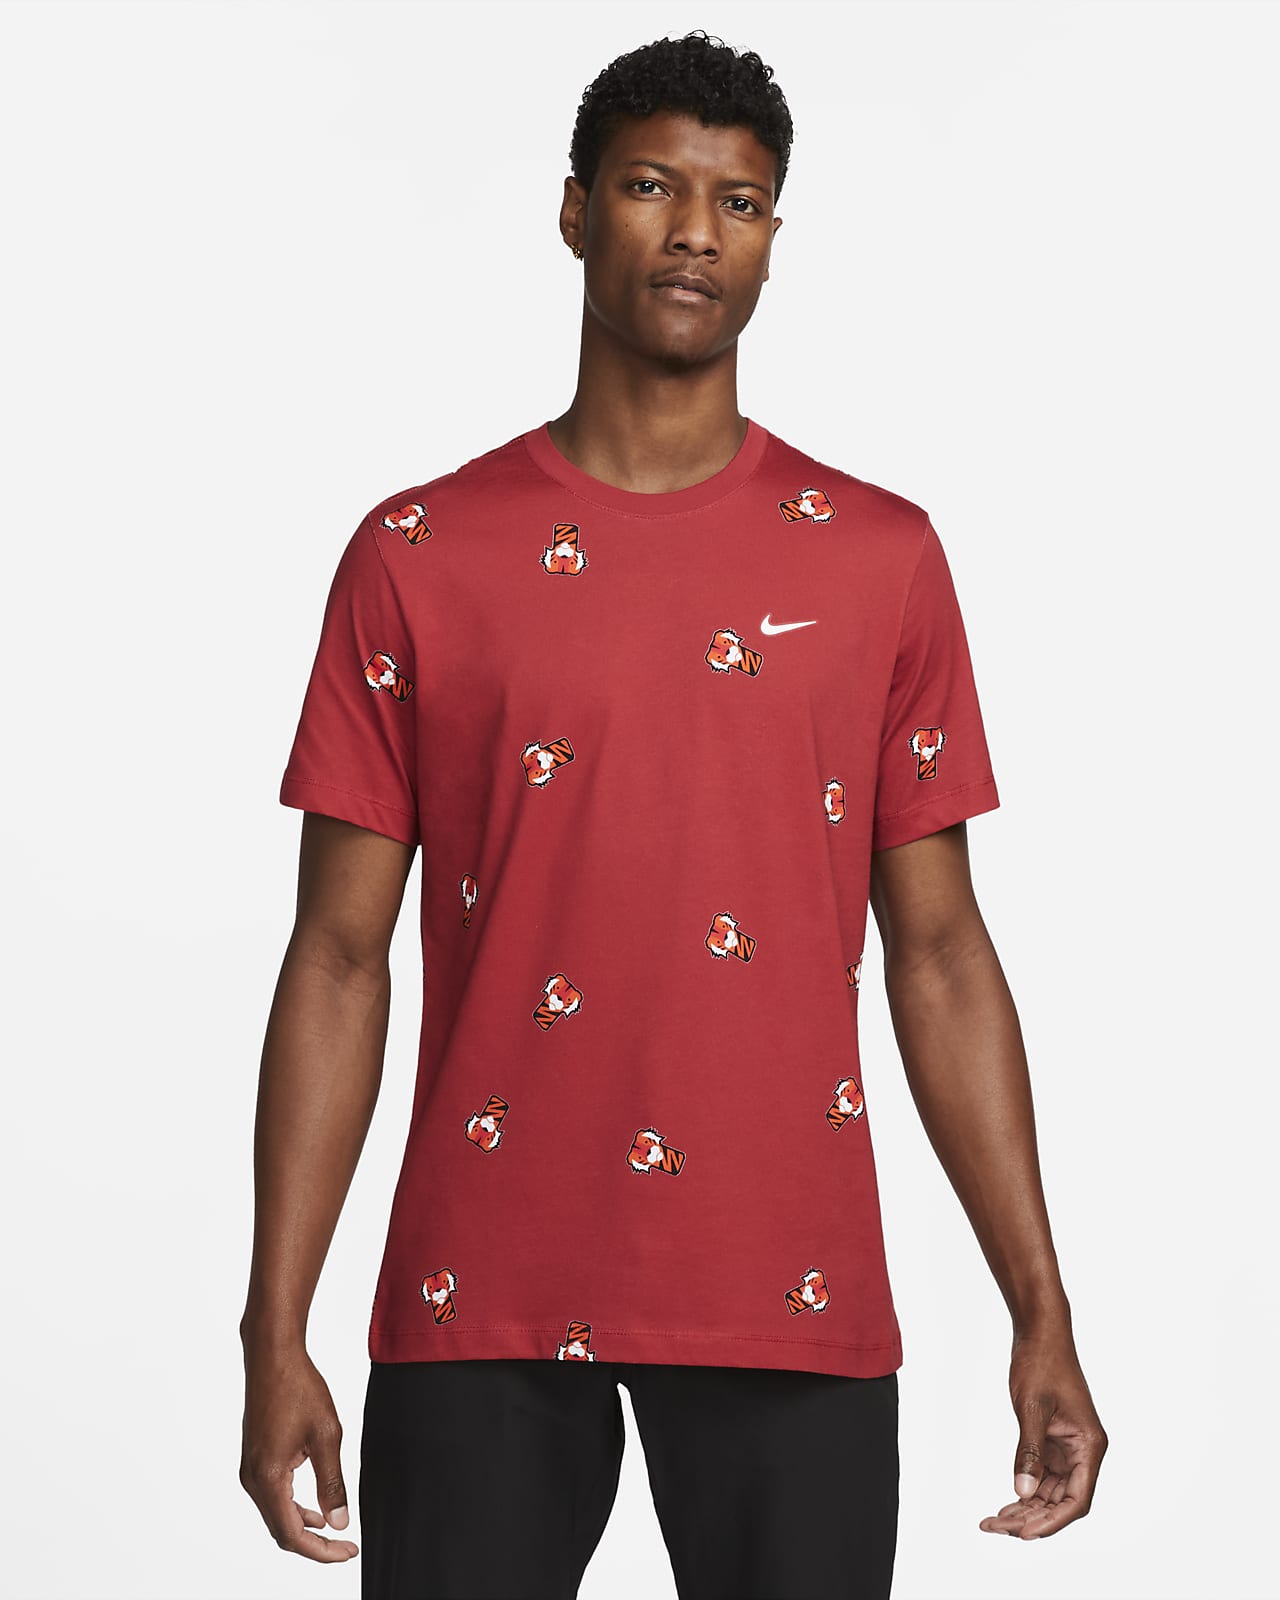 Tiger Woods "Frank" T-Shirt. Nike.com